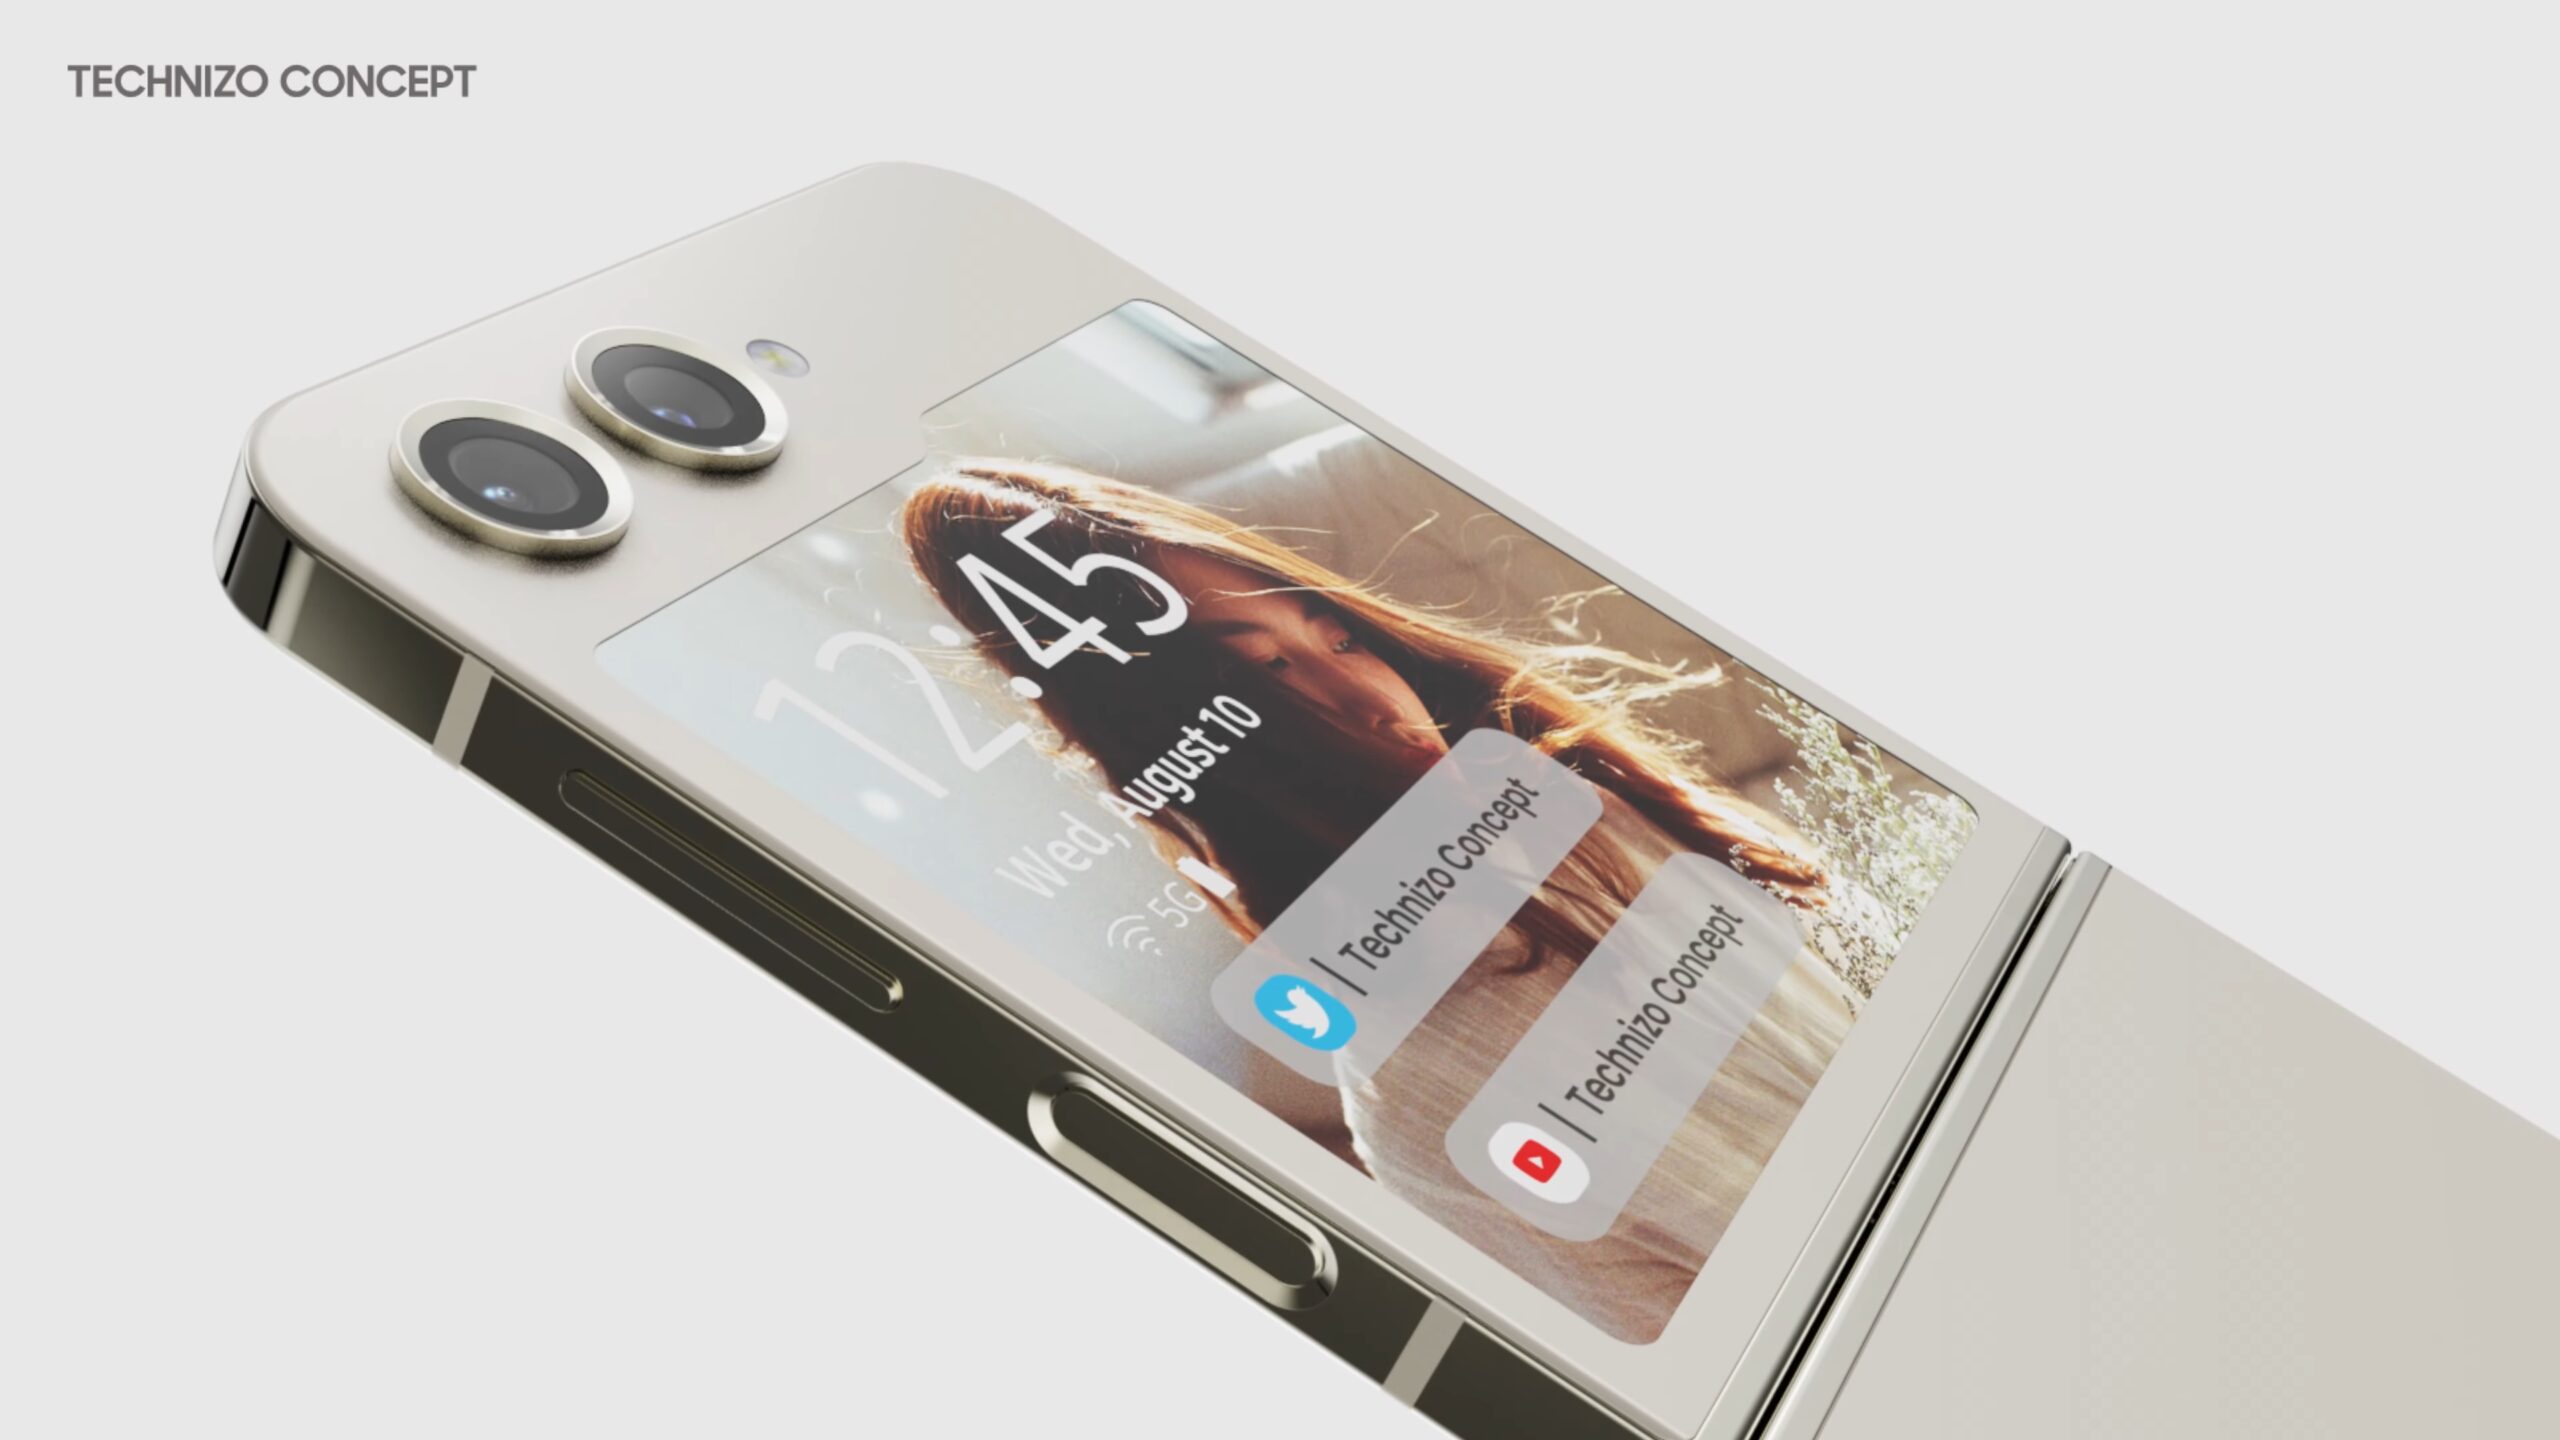 Samsung Galaxy Z Flip 5 - ALL OFFICIAL CASES! 